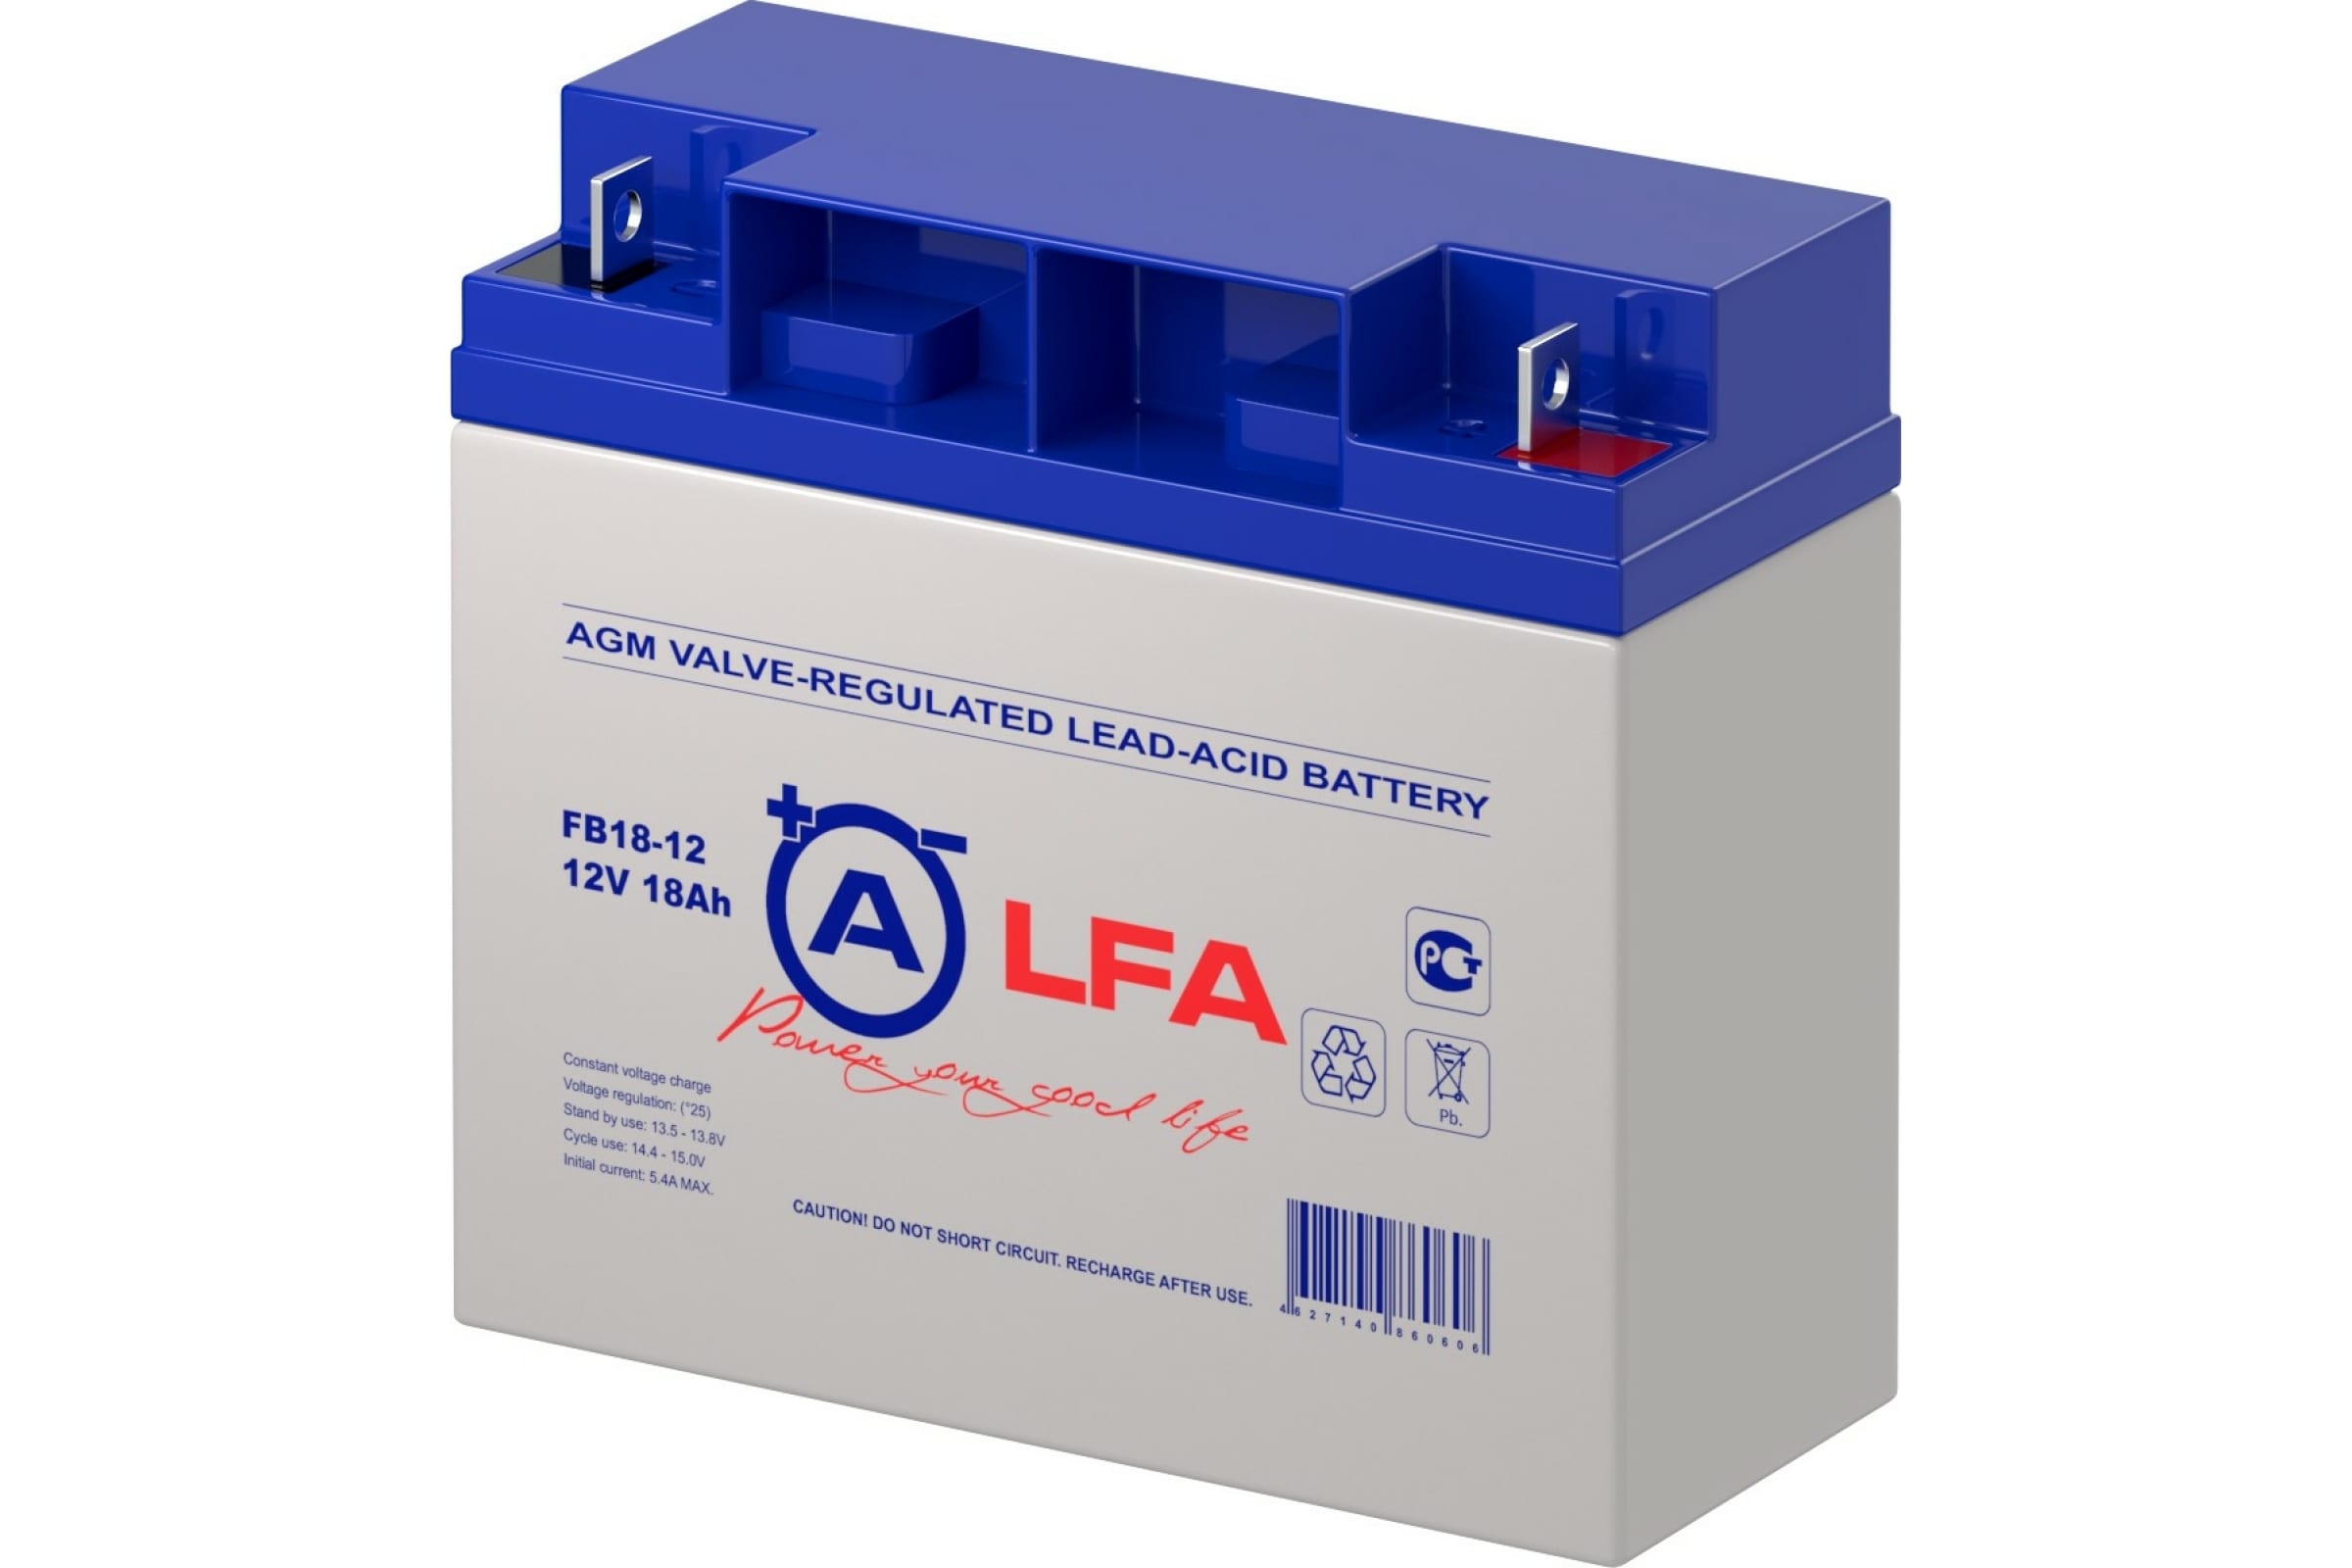 Аккумулятор battery отзывы. Аккумулятор Alfa fb 18-12 (12в 18 Ач/12v 18 Ah). Alfa Battery fb 12-12. Батарея аккумуляторная 12v 18ah Alpha Battery fb18-12. Fb18-12 LFA аккумулятор.